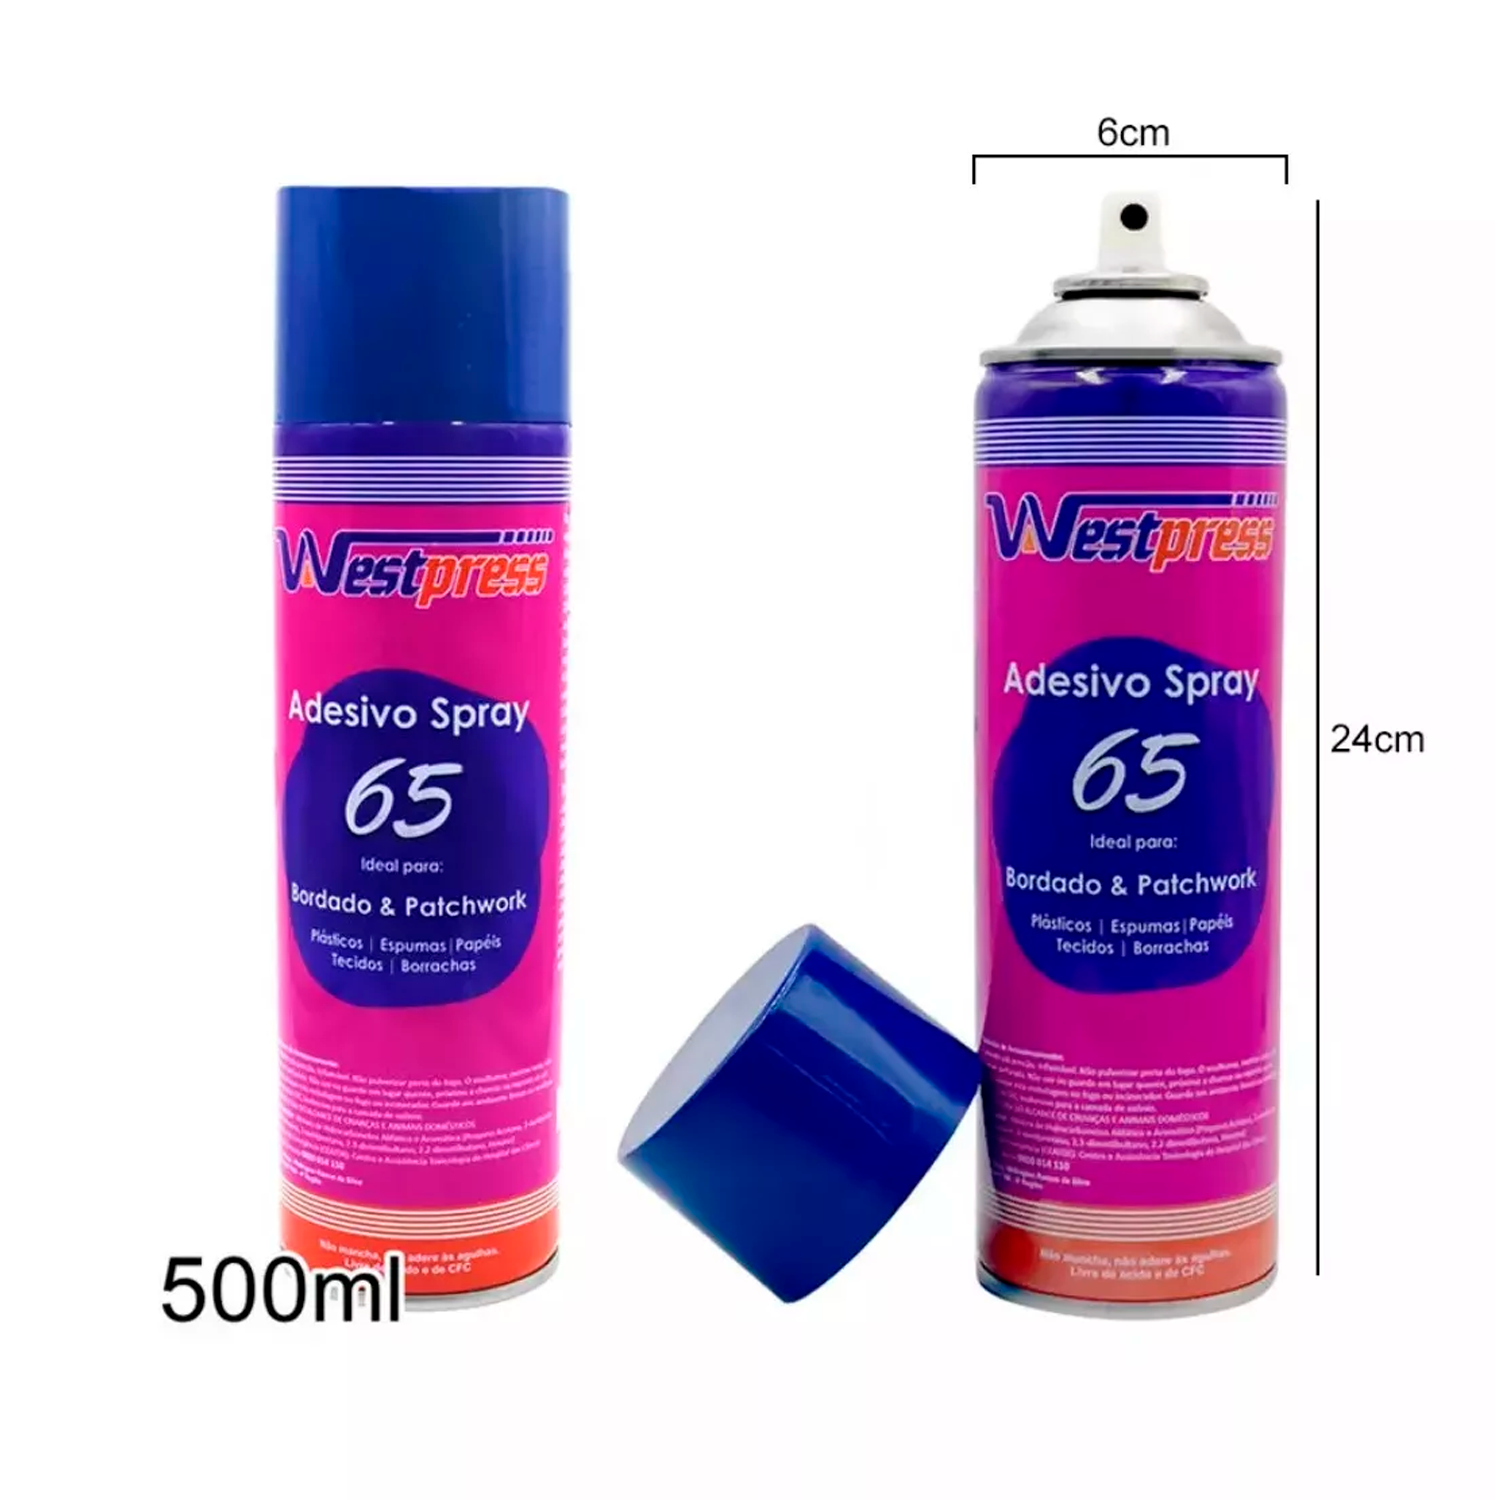 aviamentos-cola-spray-adesivo-temporaria-65-westpress-500ml-19613-1685024748583.png